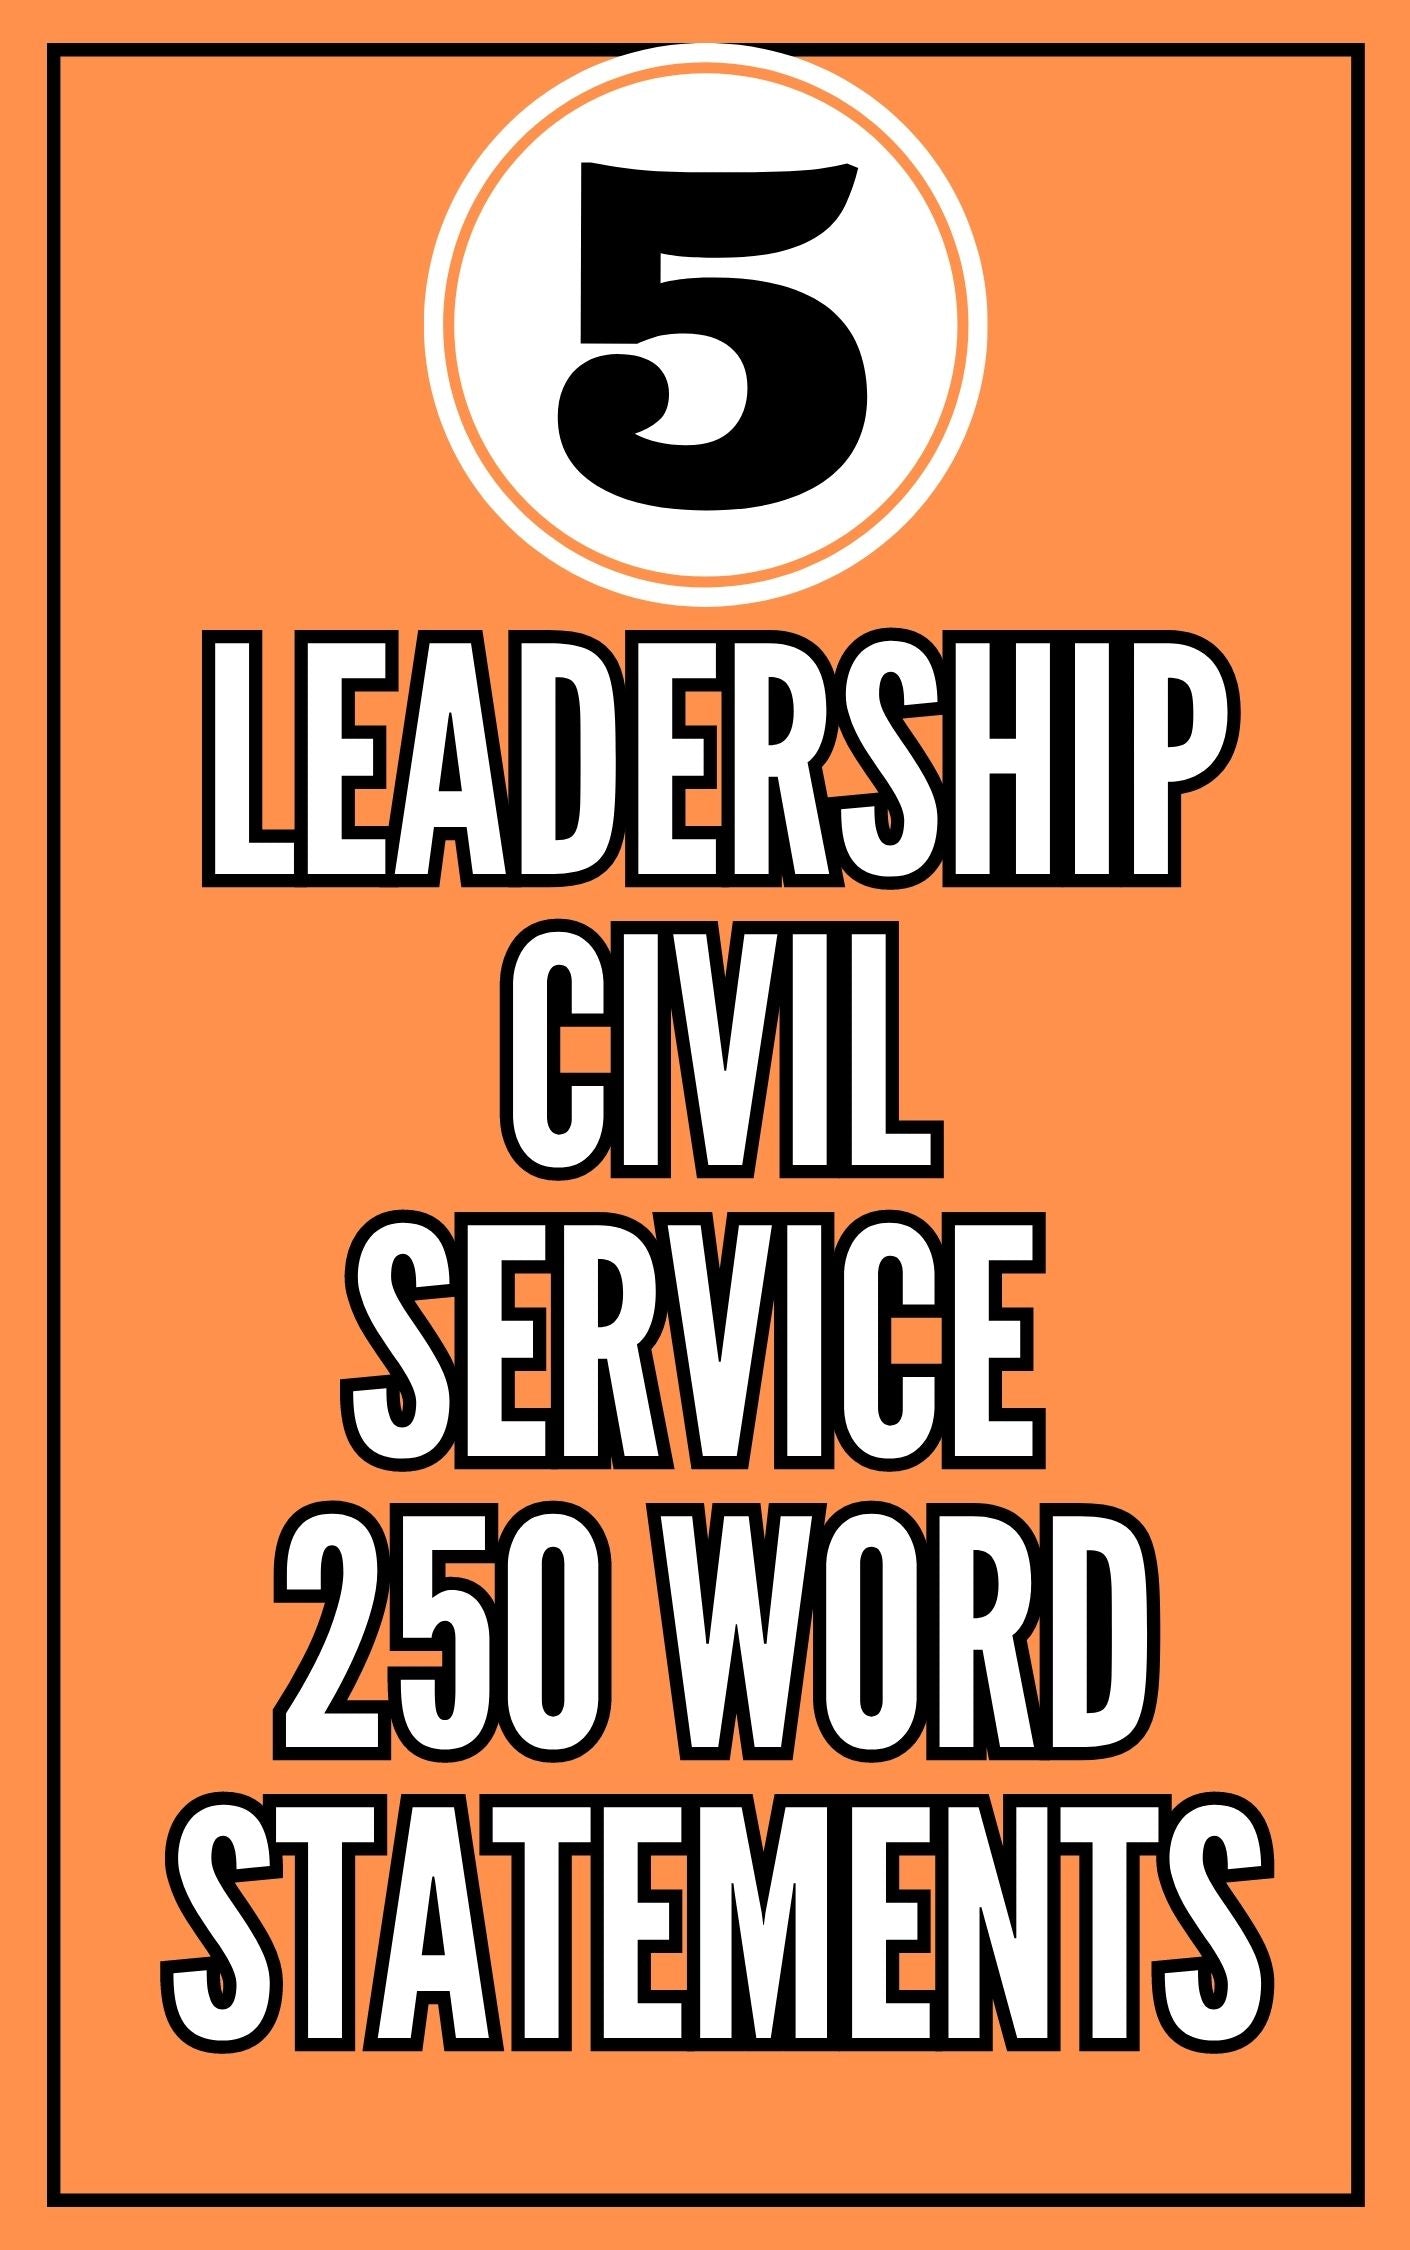 'Leadership' - 250 Word Statement Examples